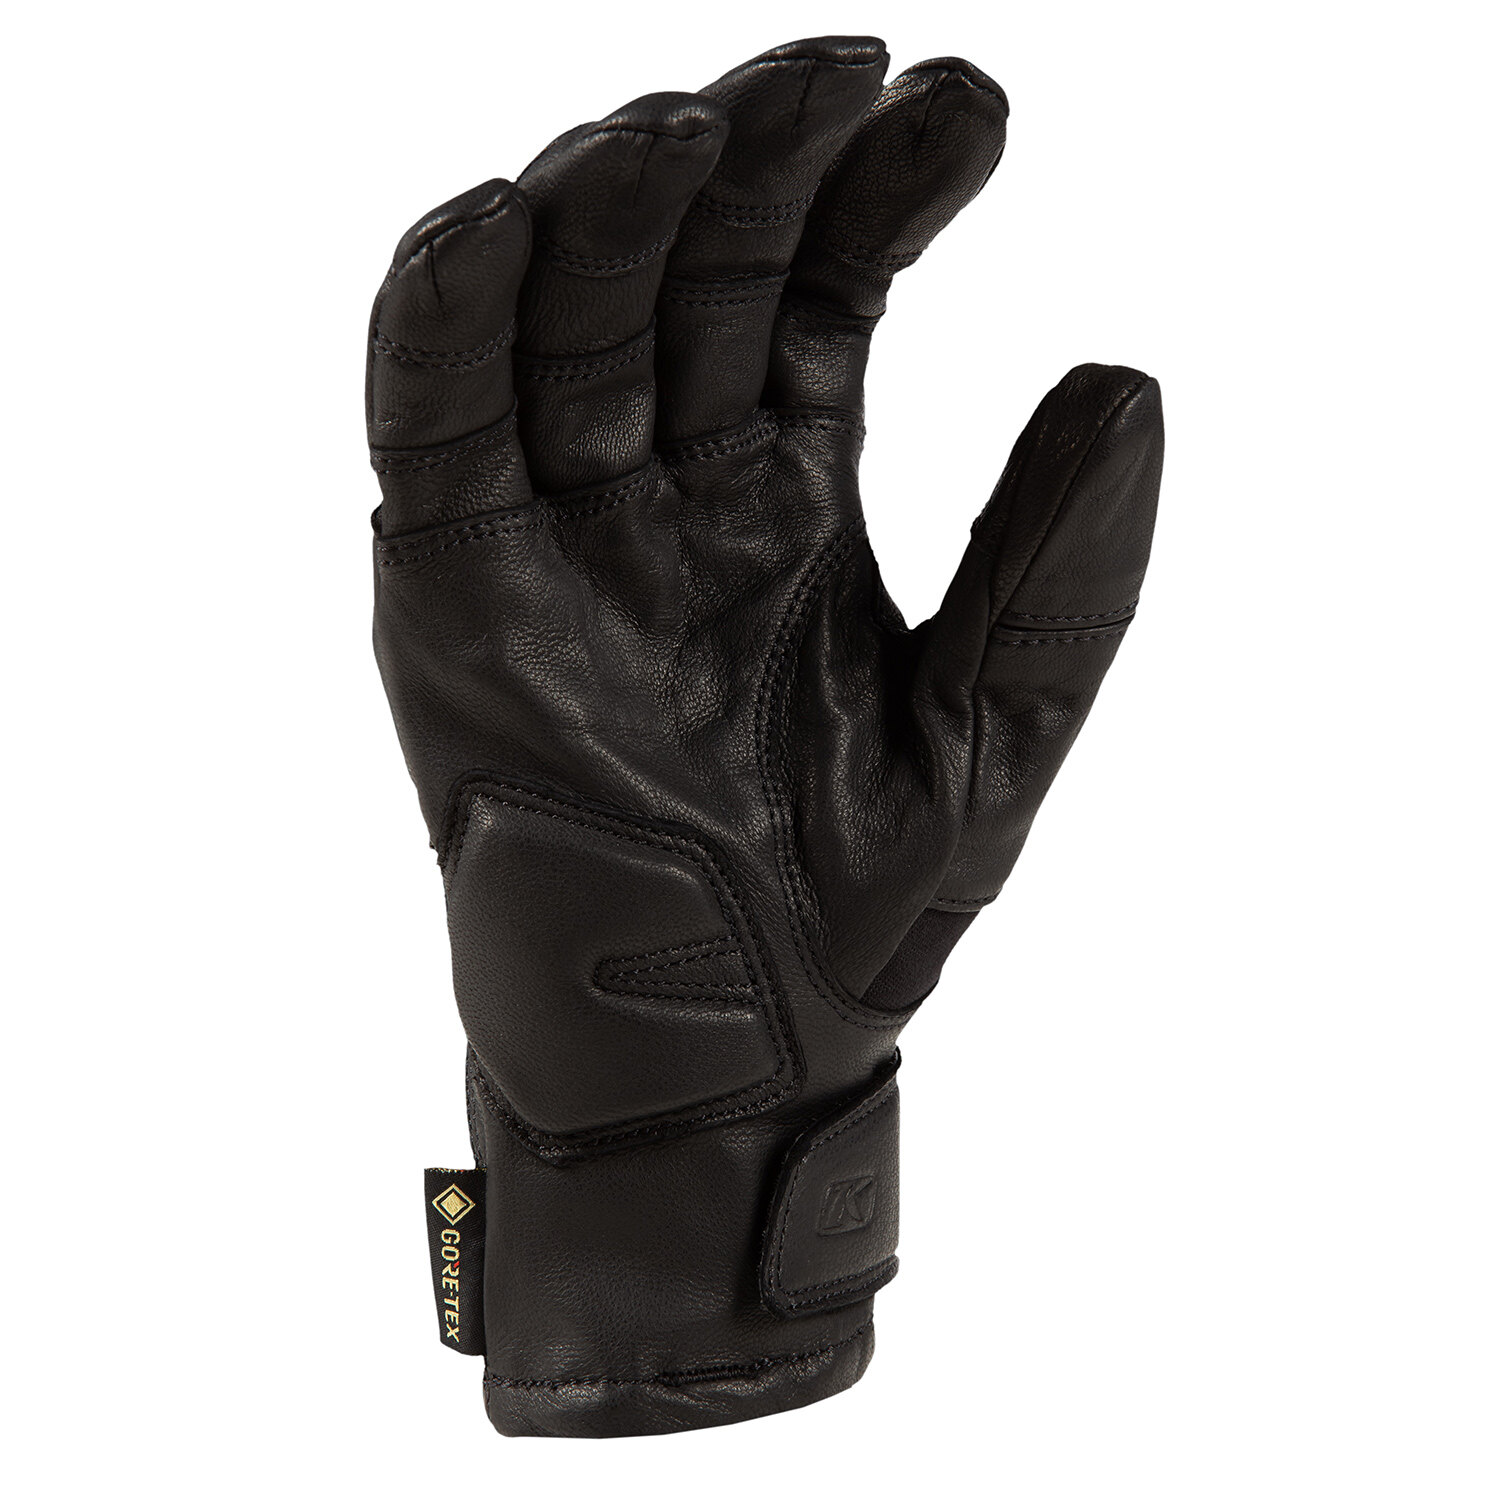 Women's Adventure GTX Short Glove XS Black